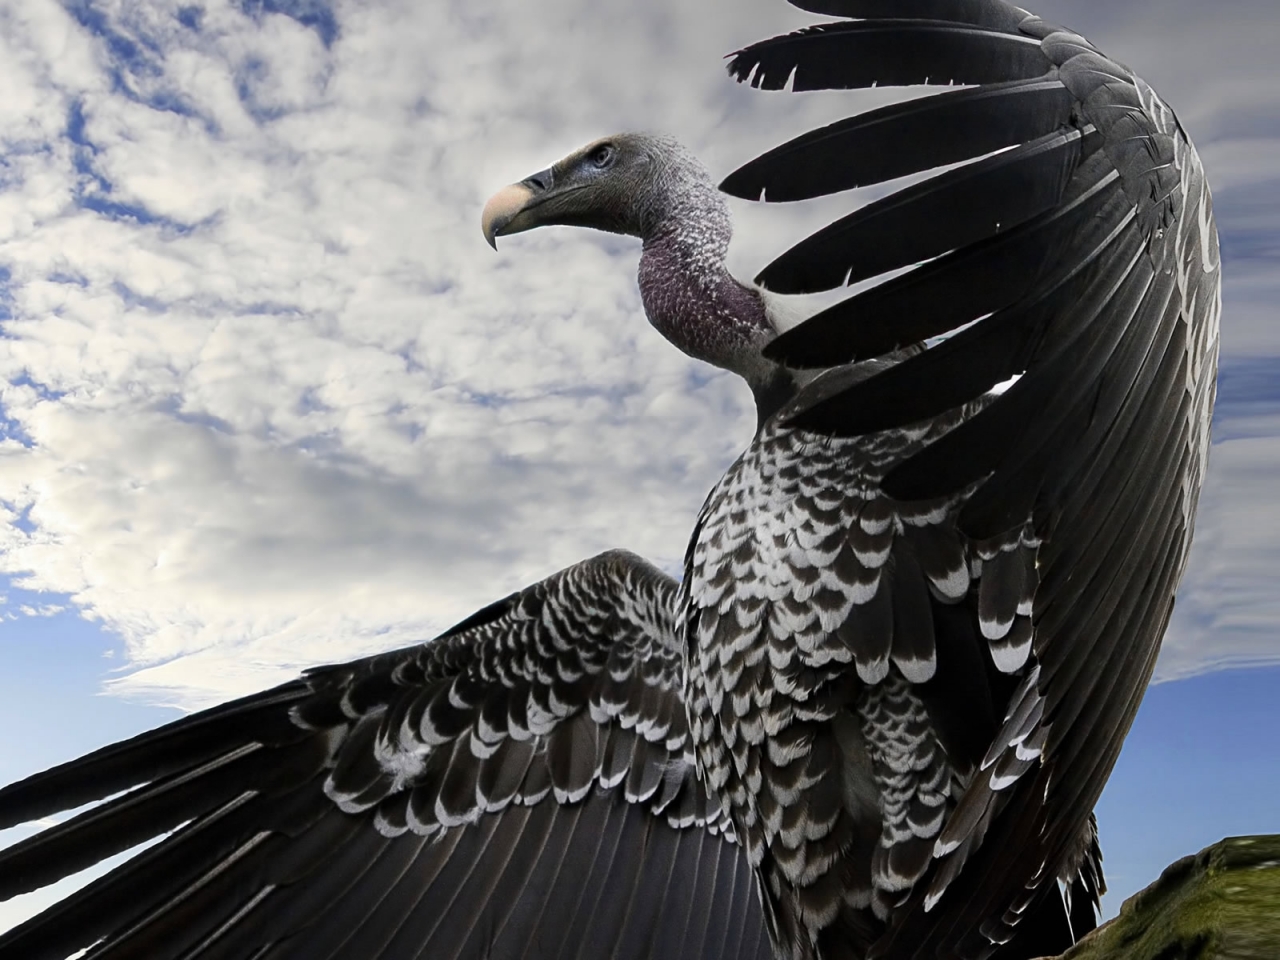 Breathtaking Condor for 1280 x 960 resolution